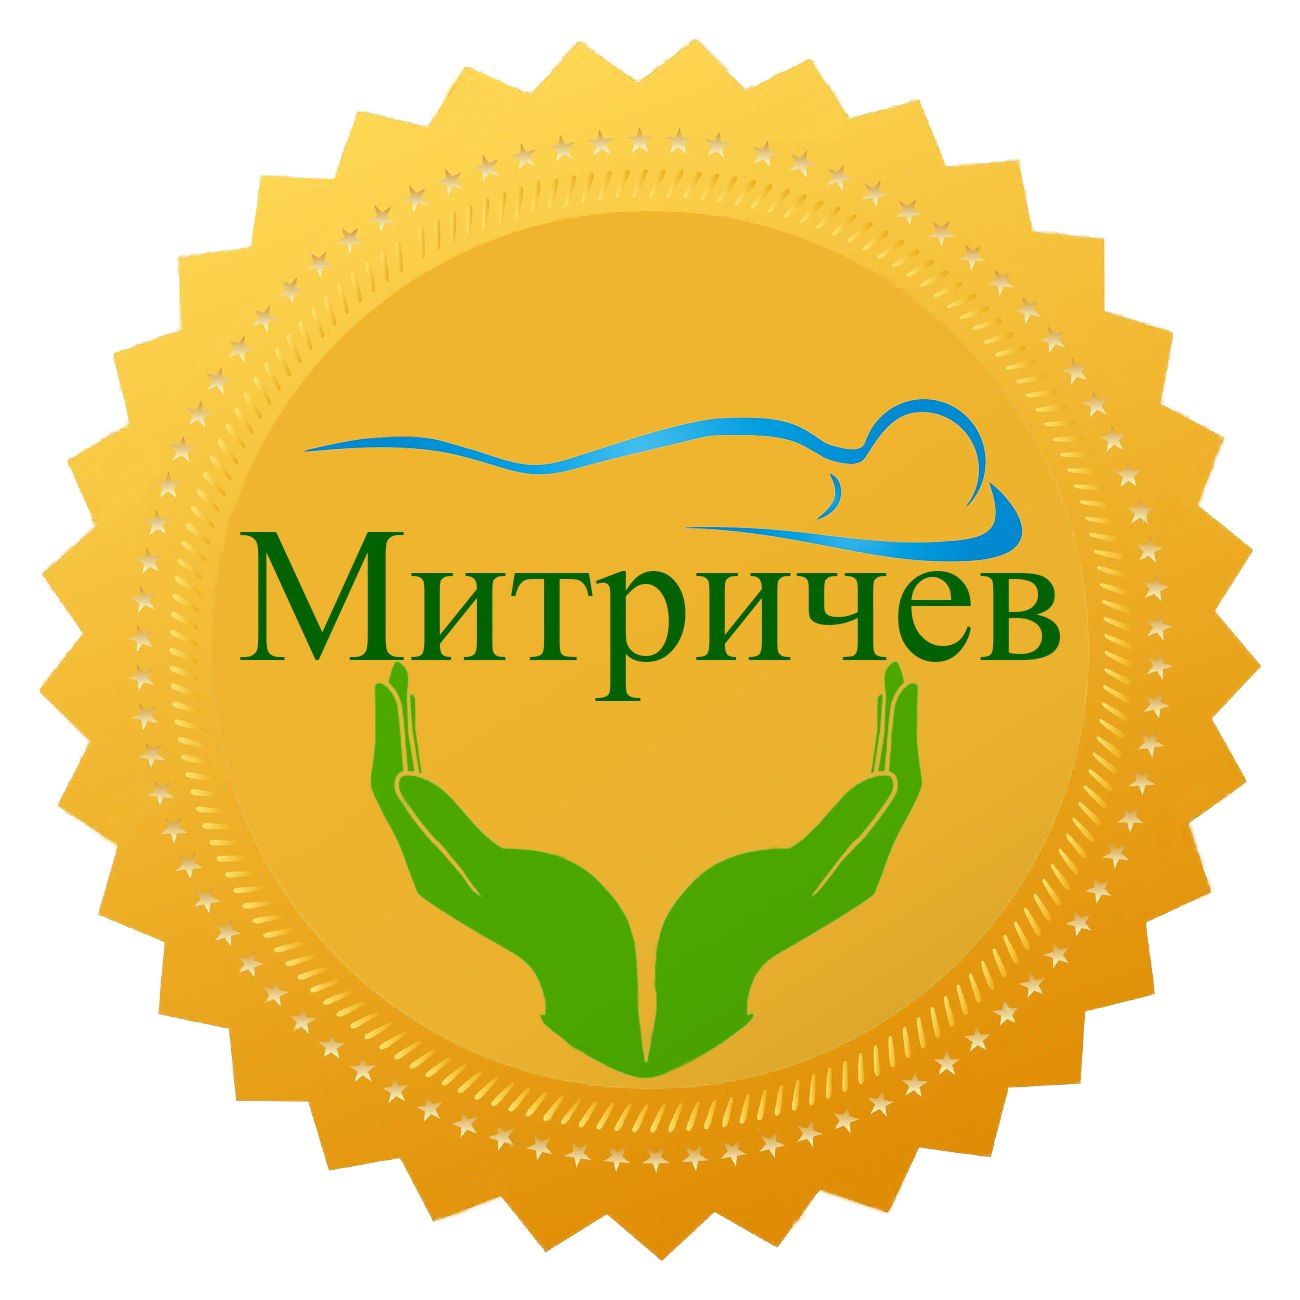 Калуги массажный. Массаж Митричев, Калуга. Логотип массажного салона. Массажный реклама для салона картинки.